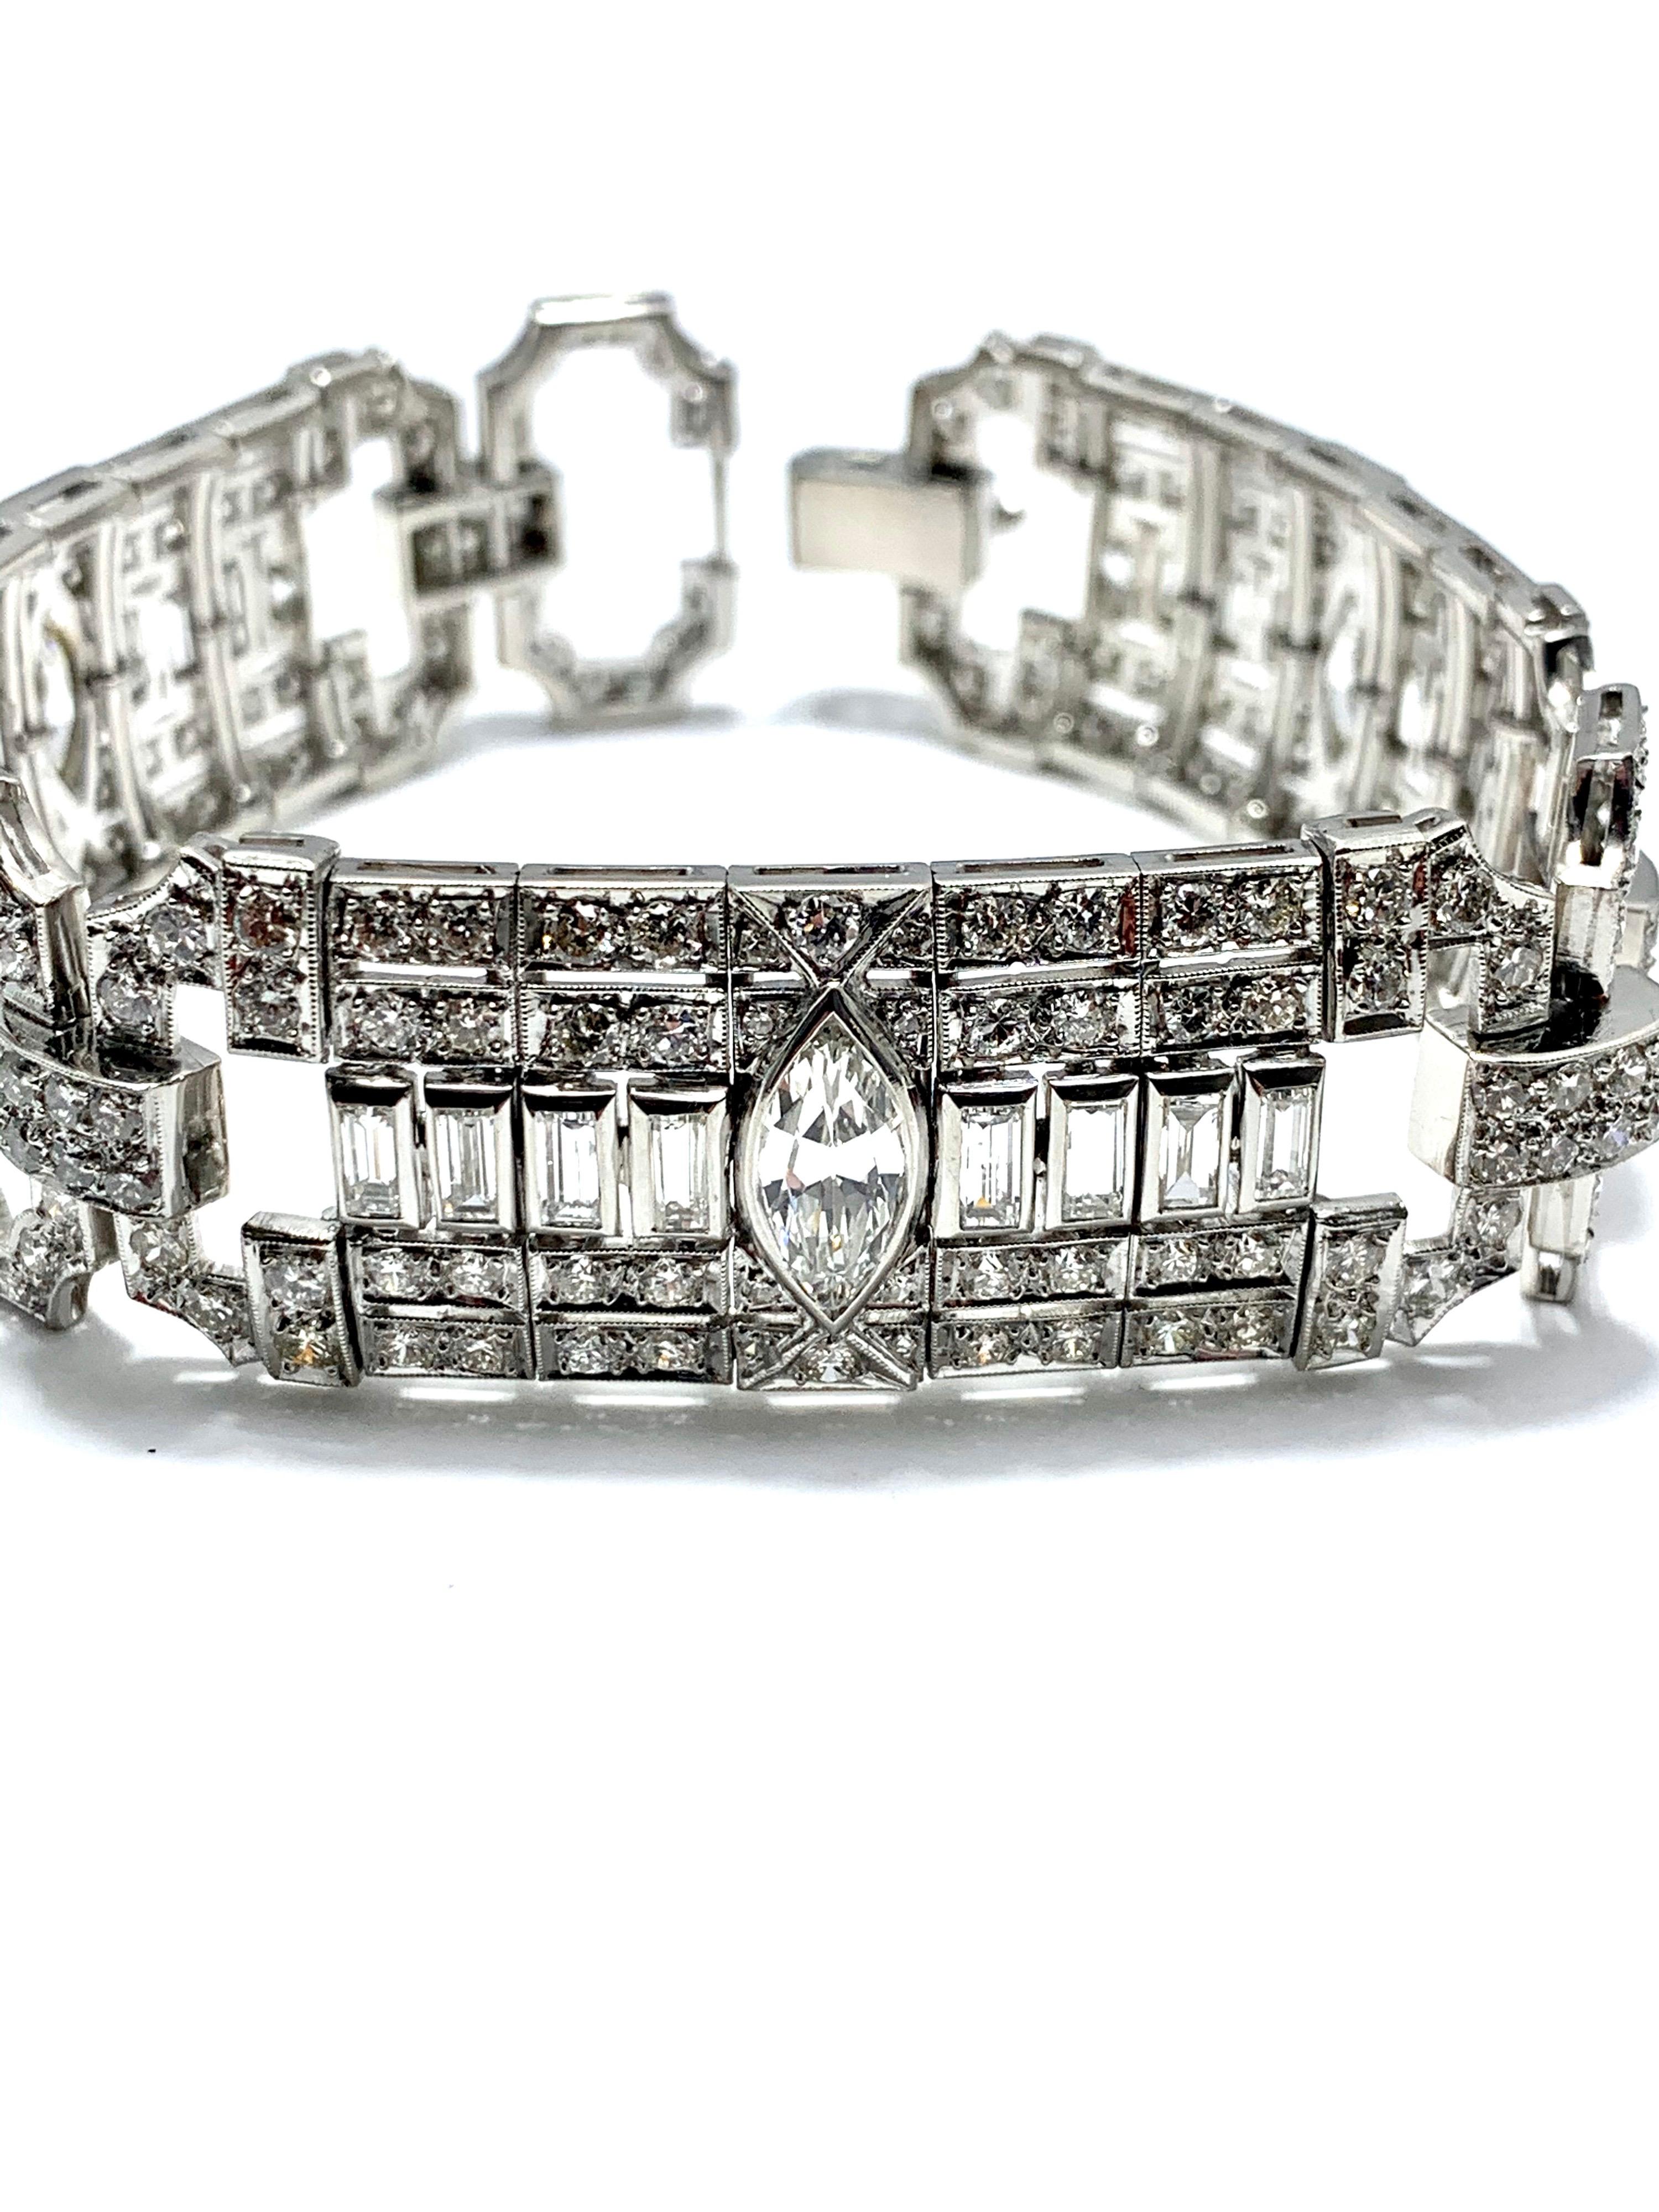 10.25 Carat Art Deco Style Diamond and Platinum Bracelet 5